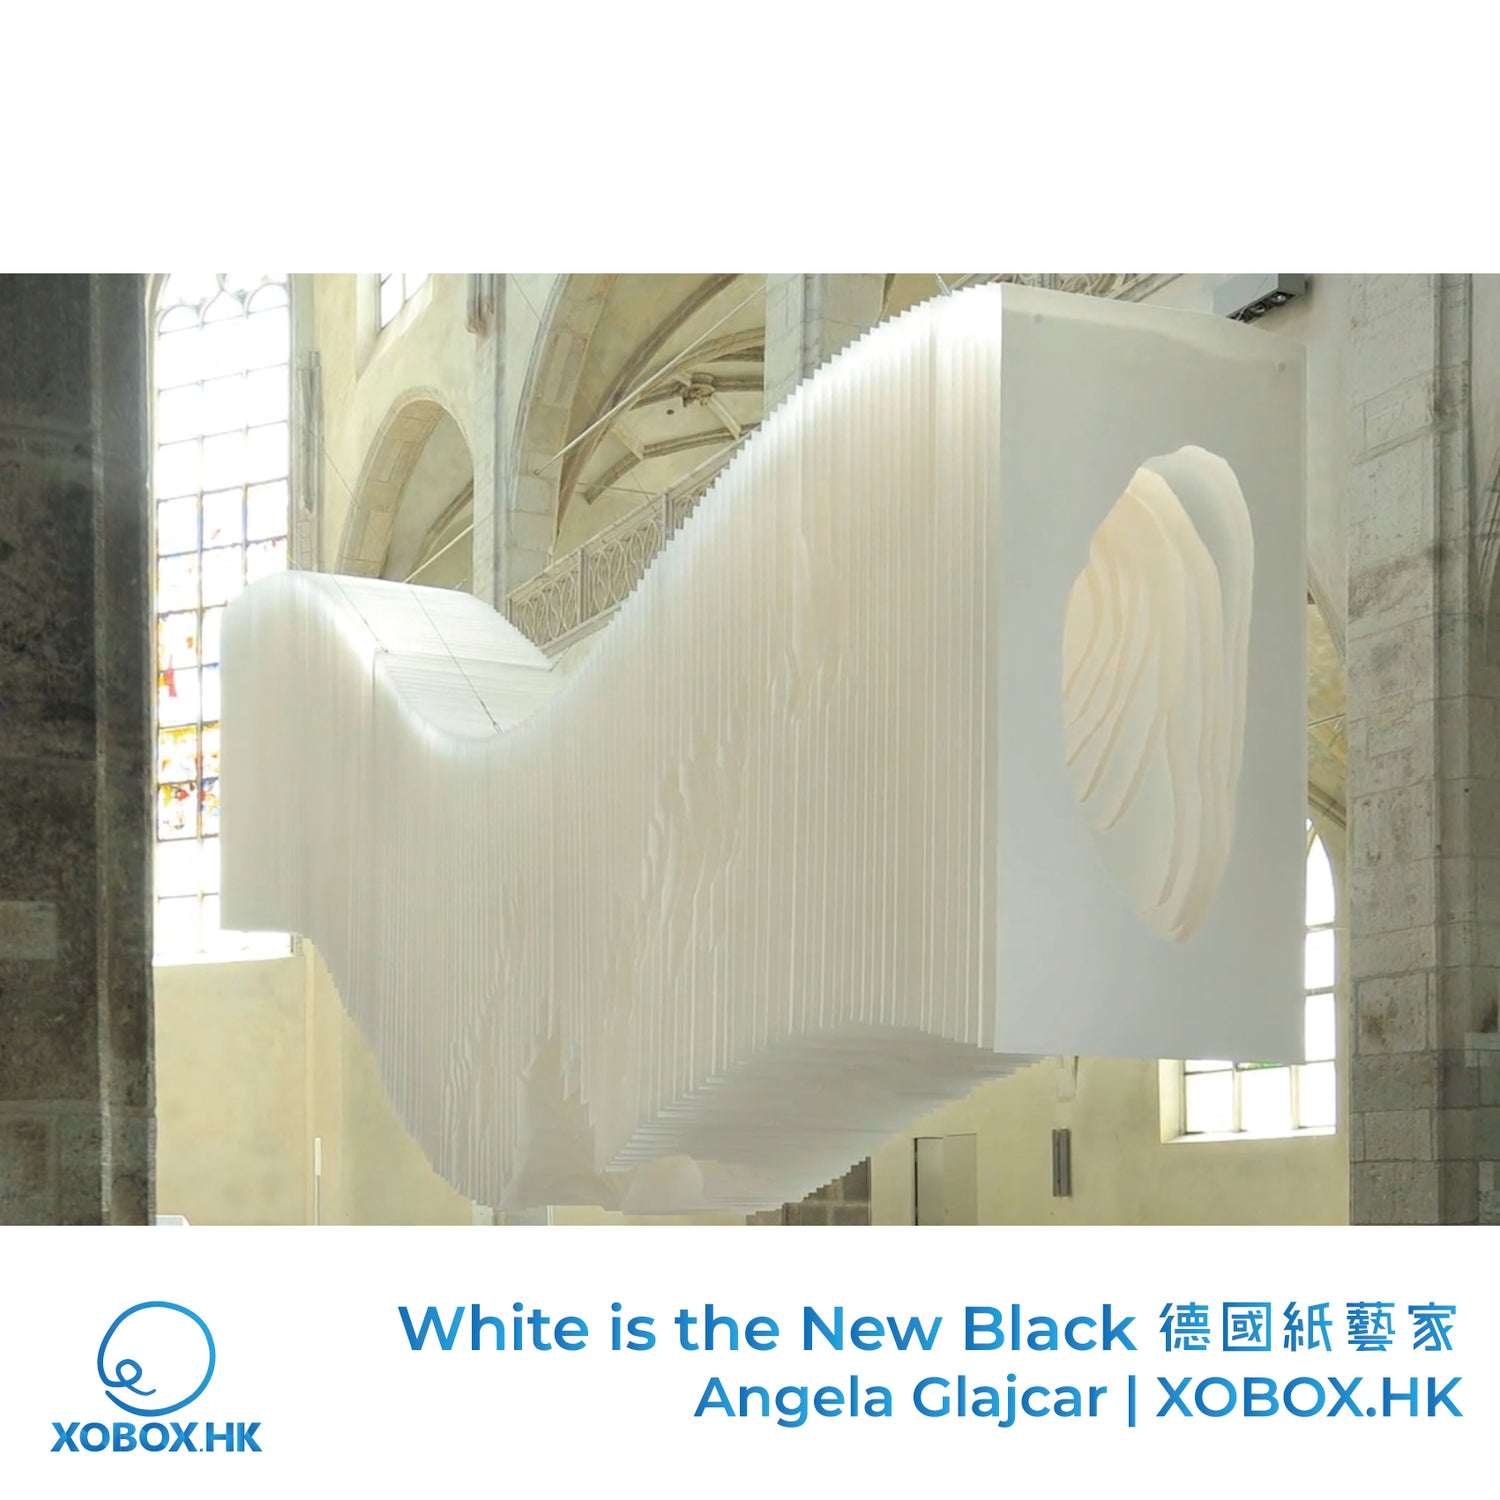 White is the New Black 德國紙藝家 Angela Glajcar | XOBOX.HK